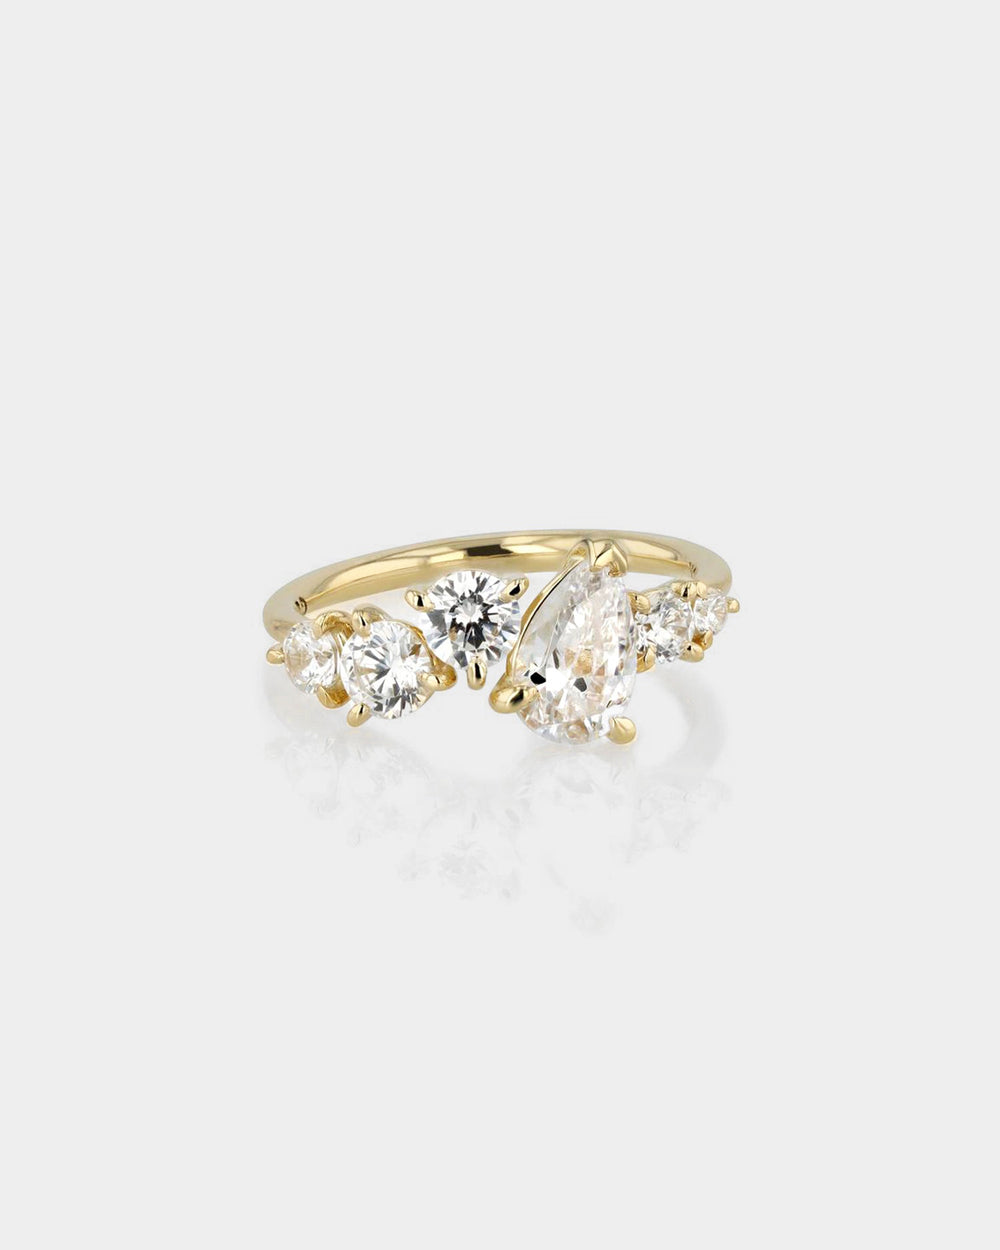 Multi Diamond Engagement Ring by Sarah & Sebastian